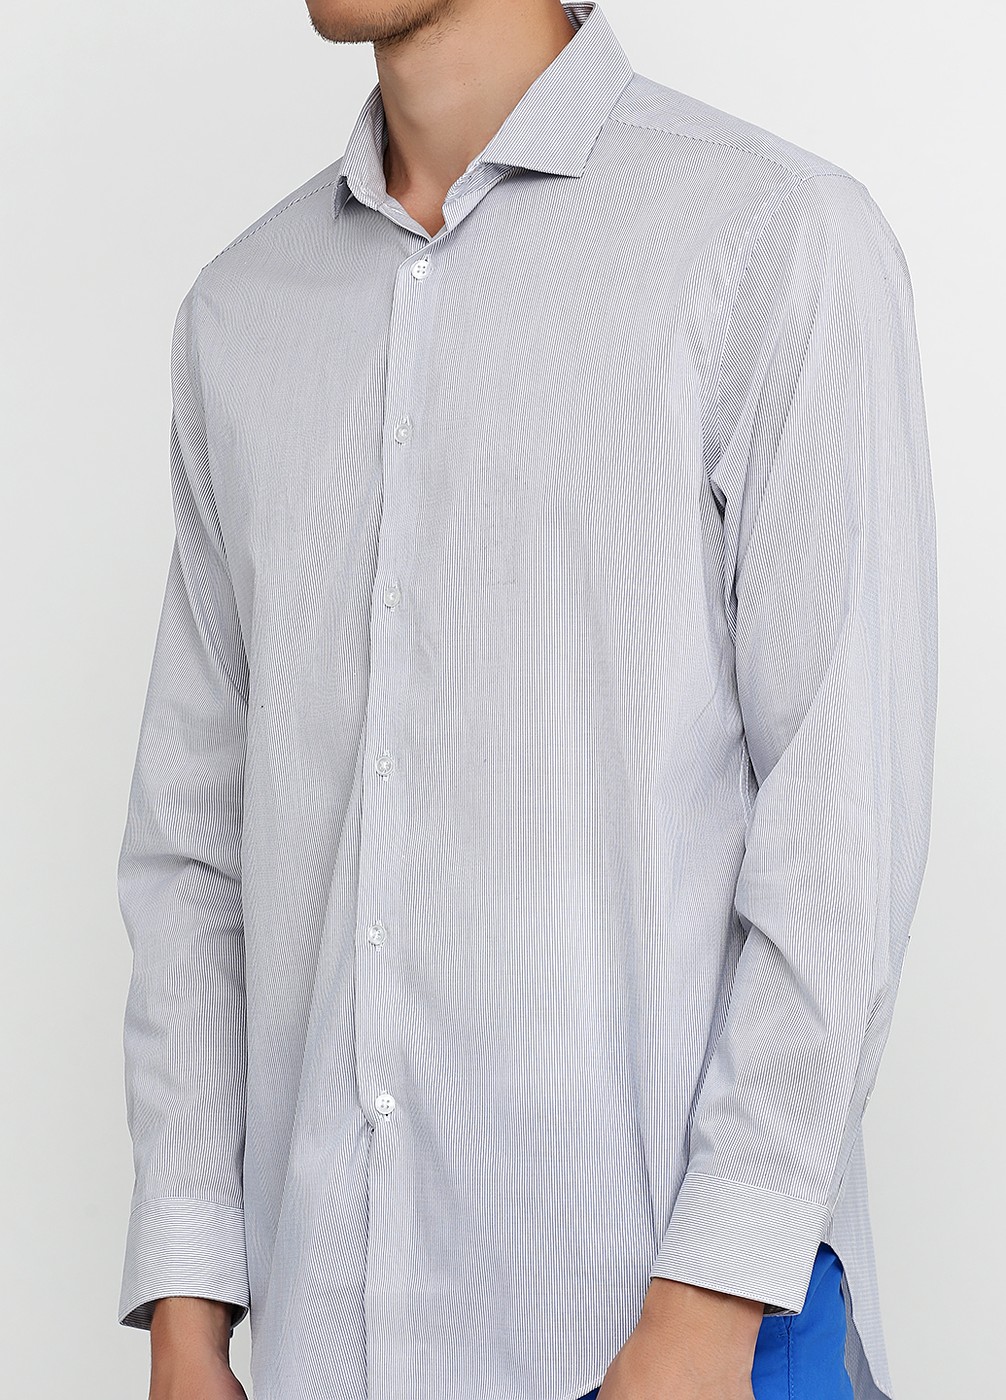 Мужская рубашка - рубашка Calvin Klein, XL, XL